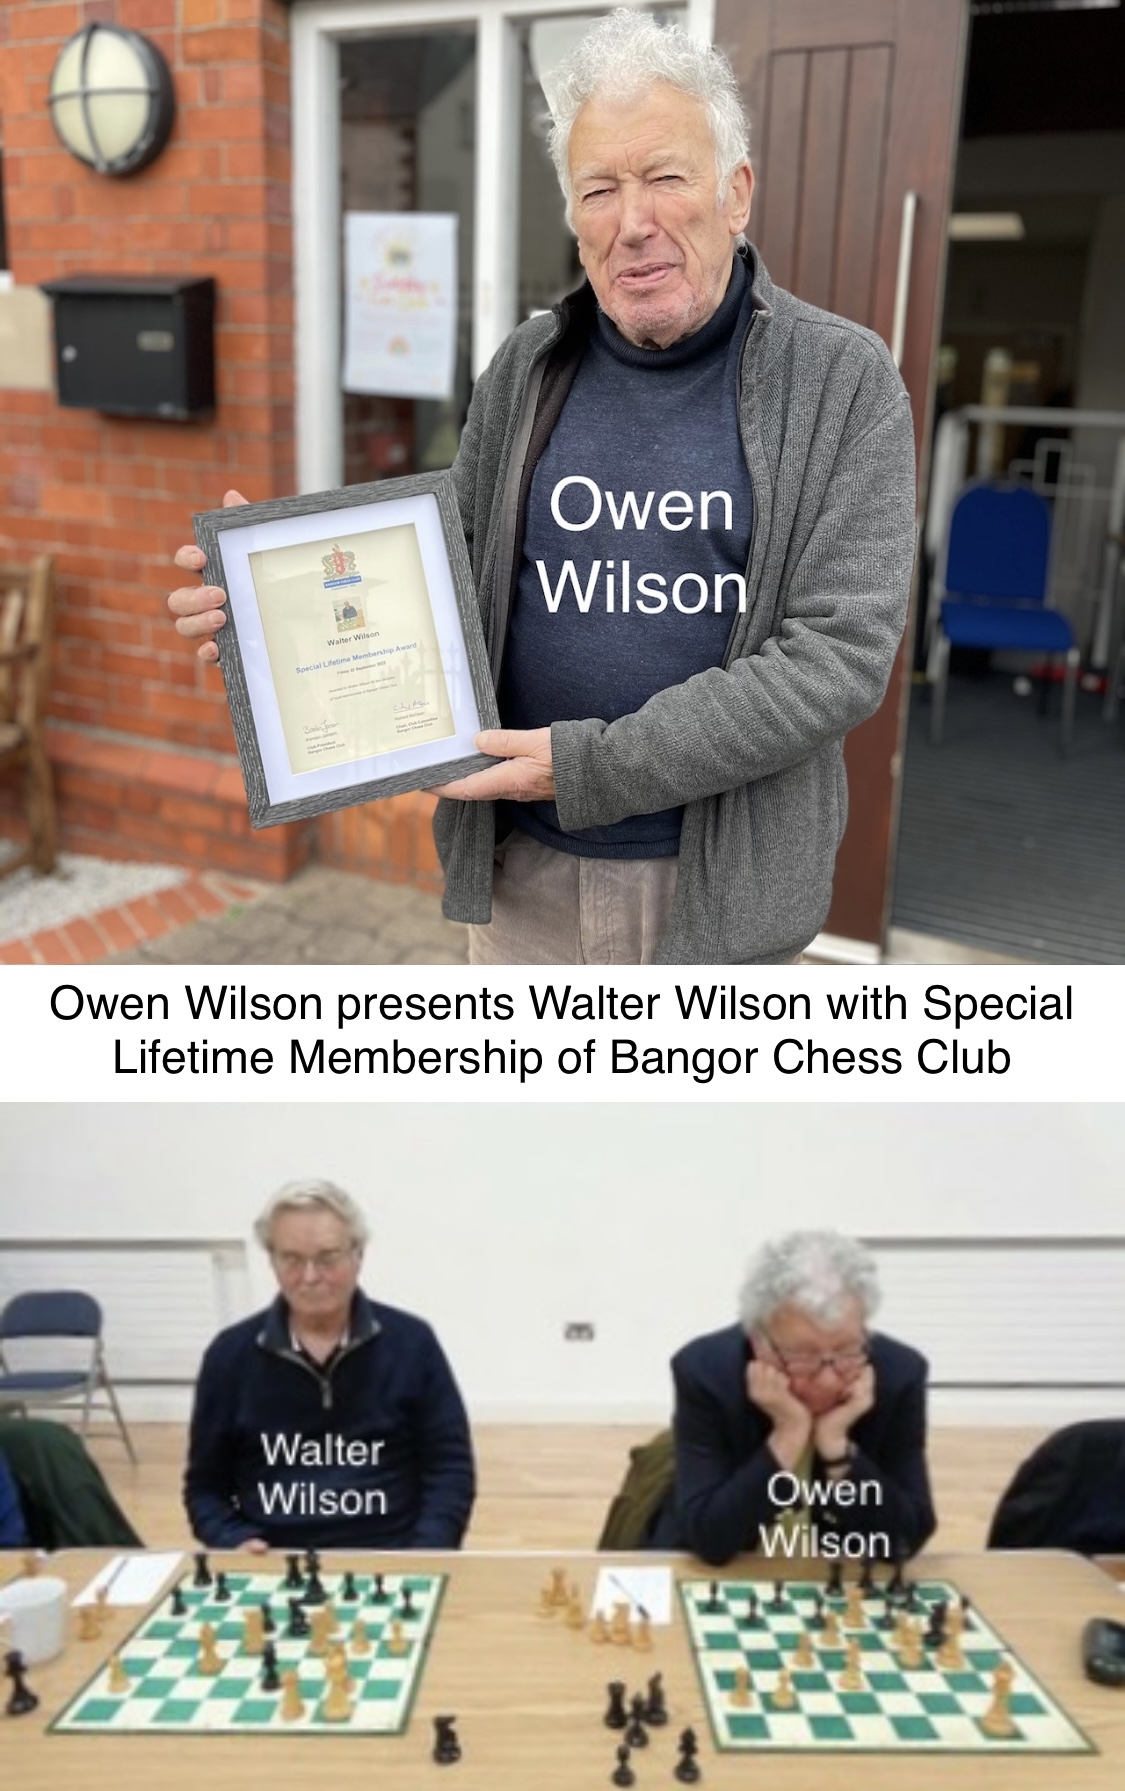 Walter Wilson awarded ‘Special Lifetime Membership’ of Bangor Chess Club.